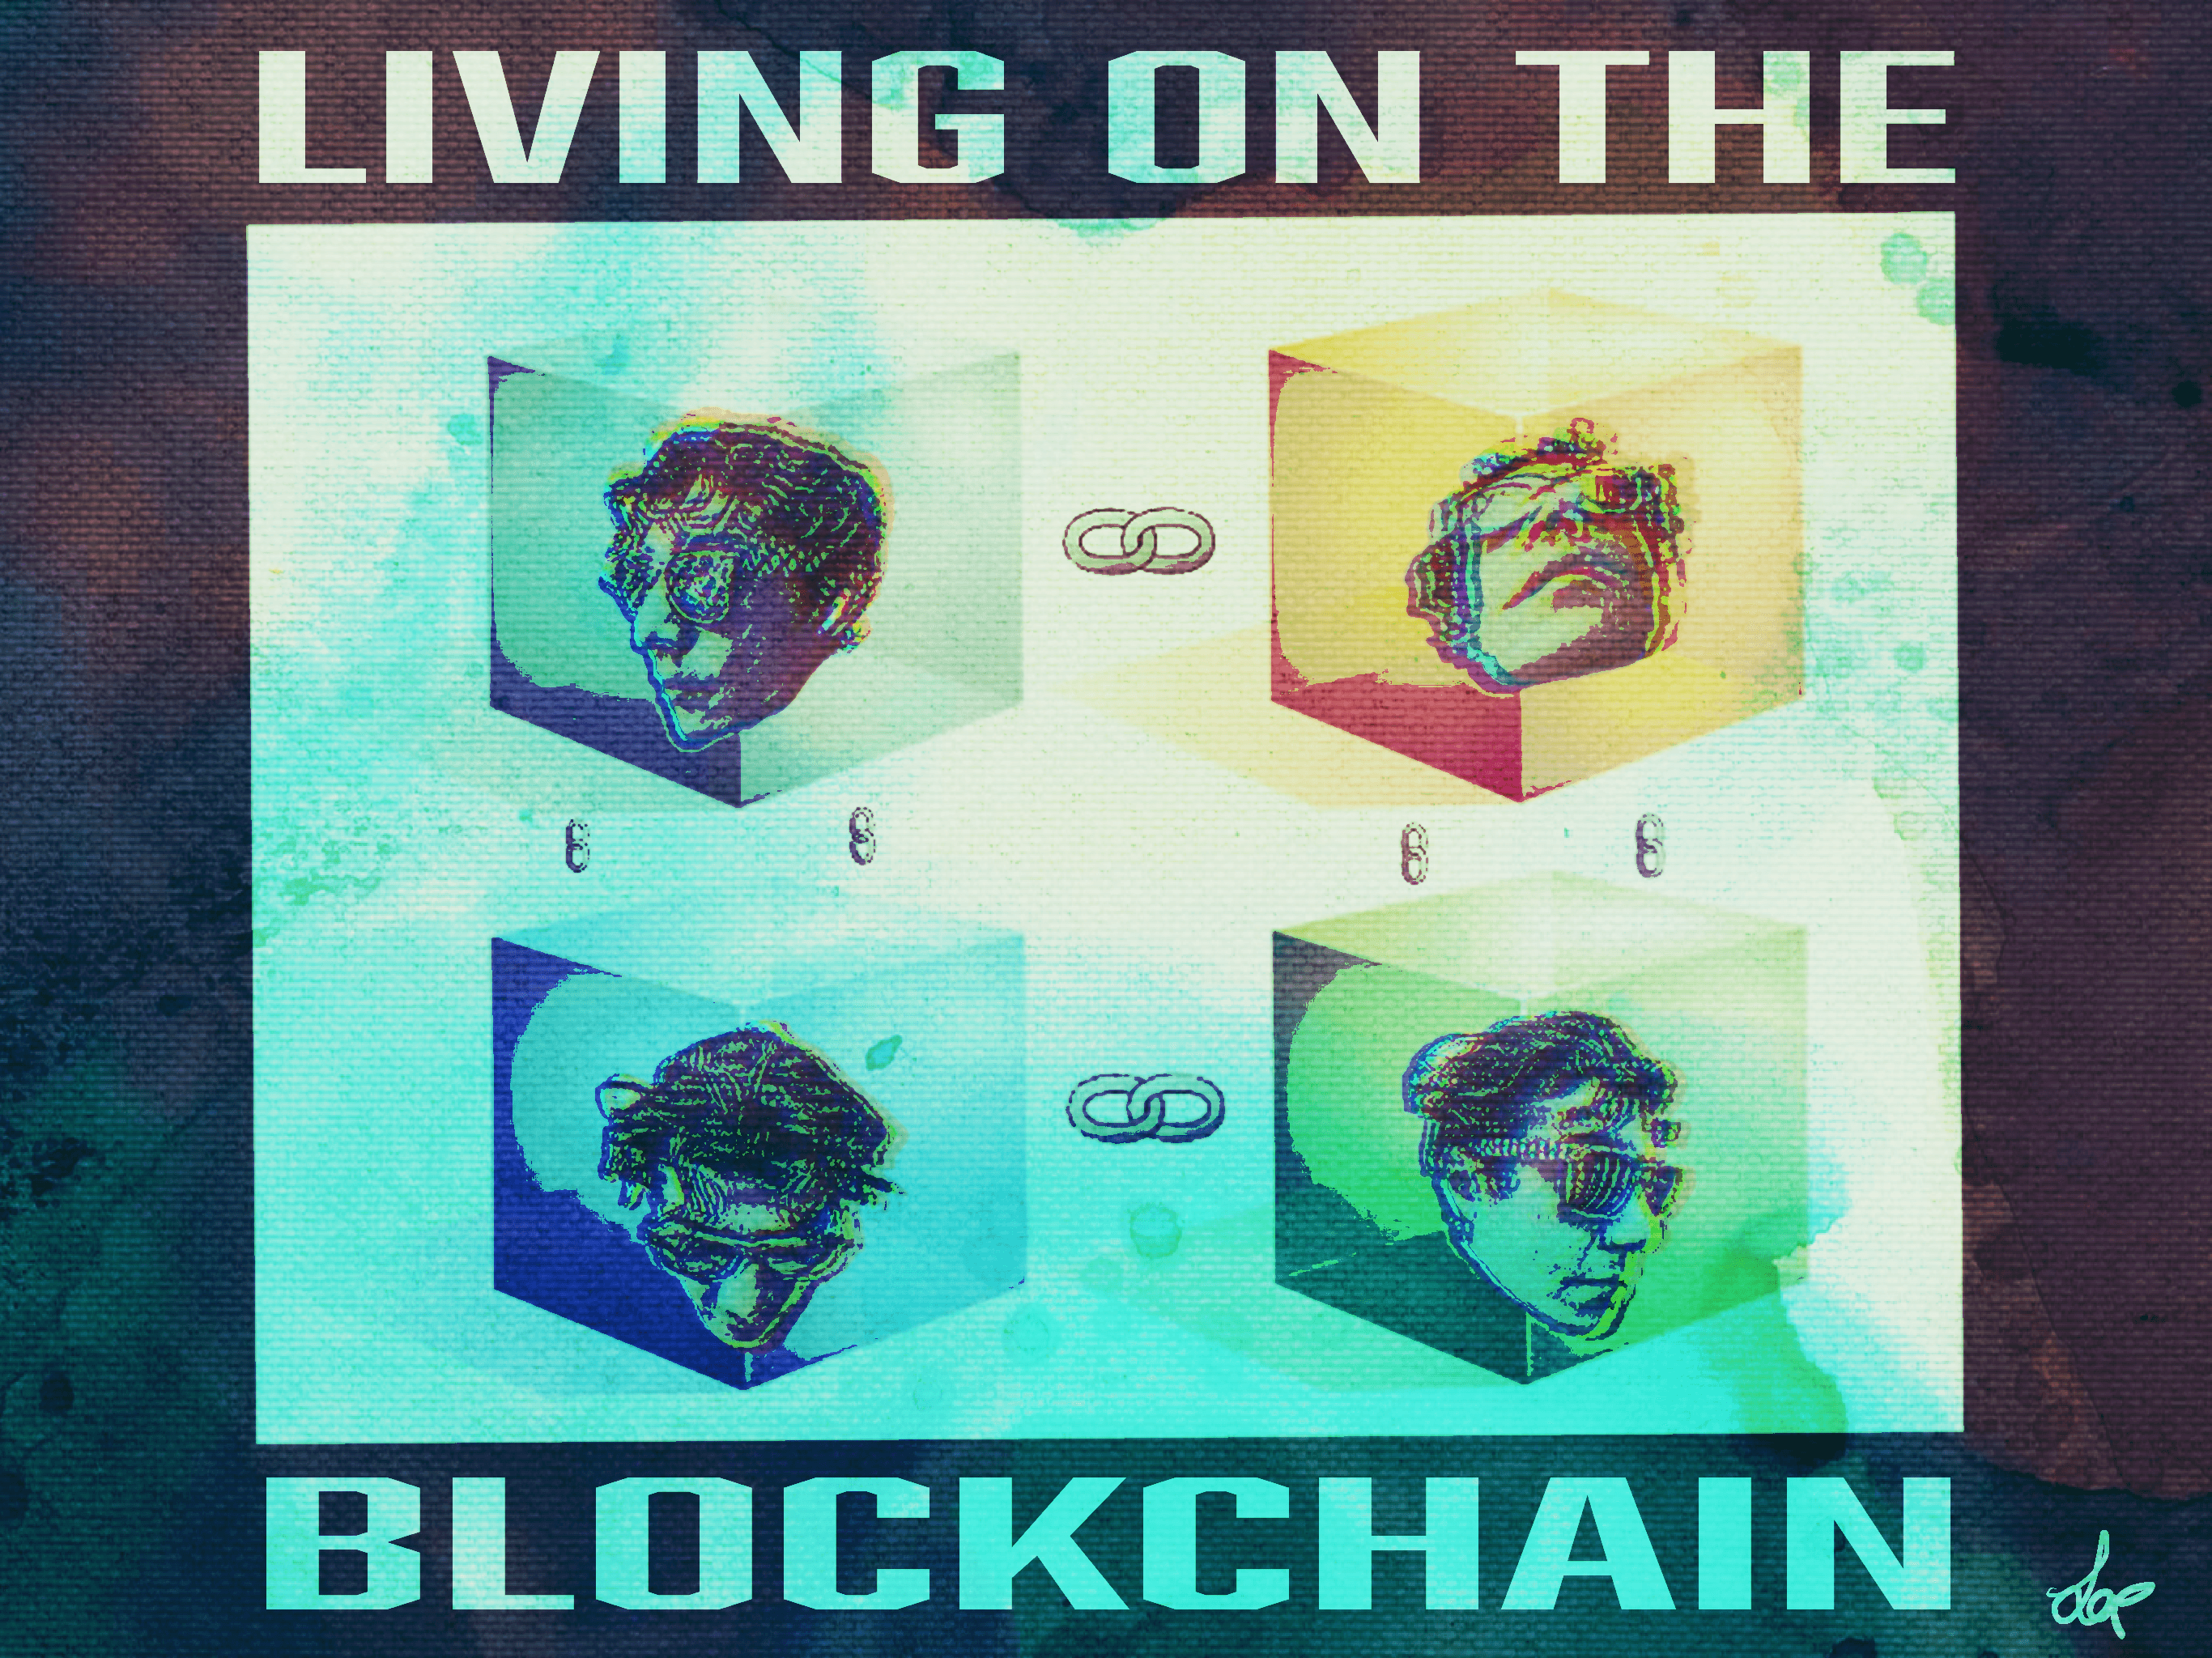 03. Living on the Blockchain